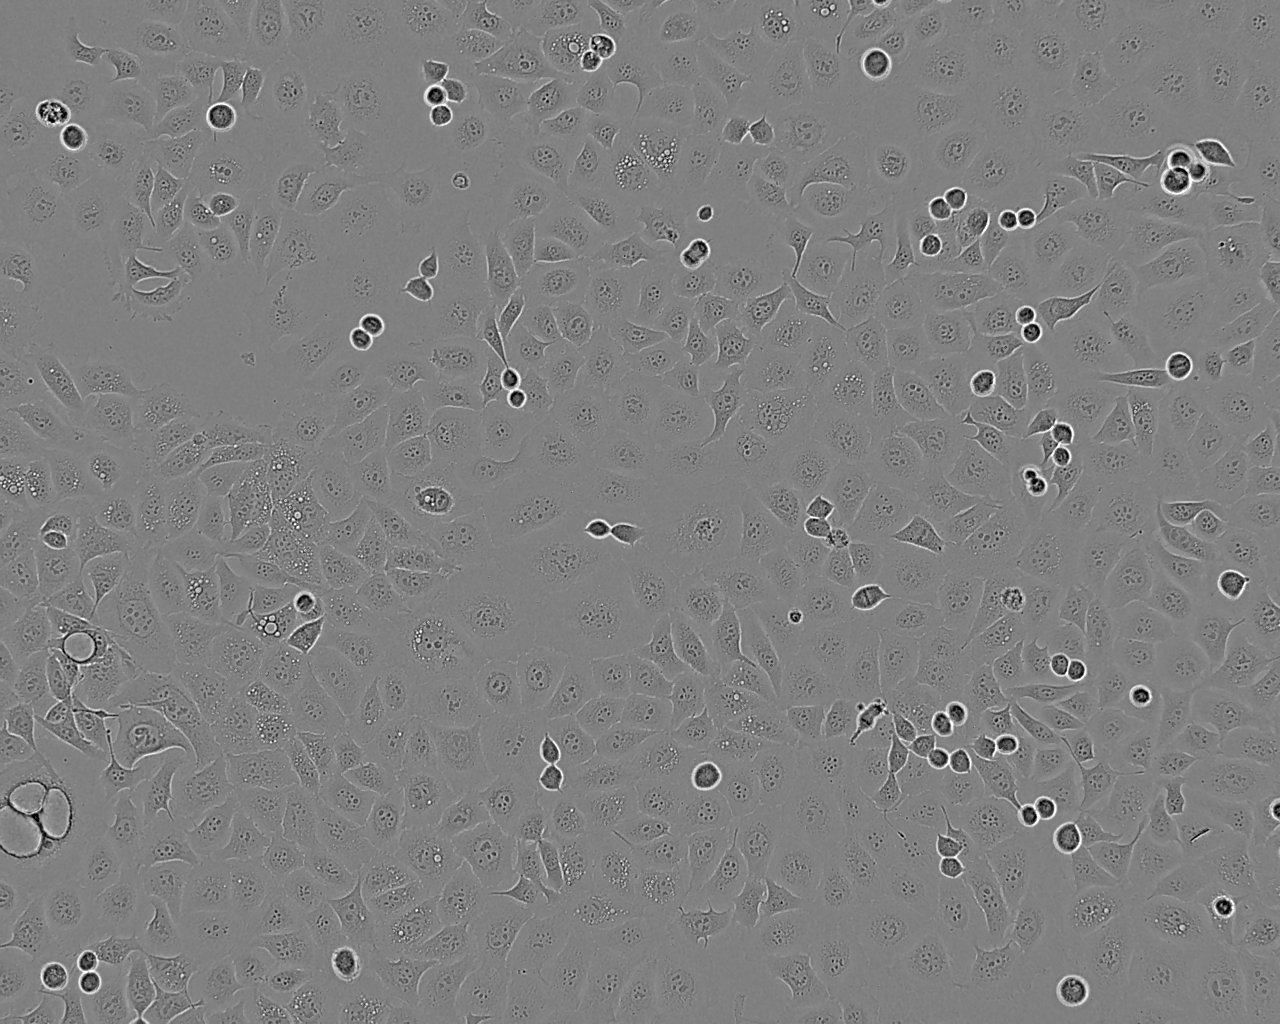 HS-5细胞：人骨髓基质细胞系